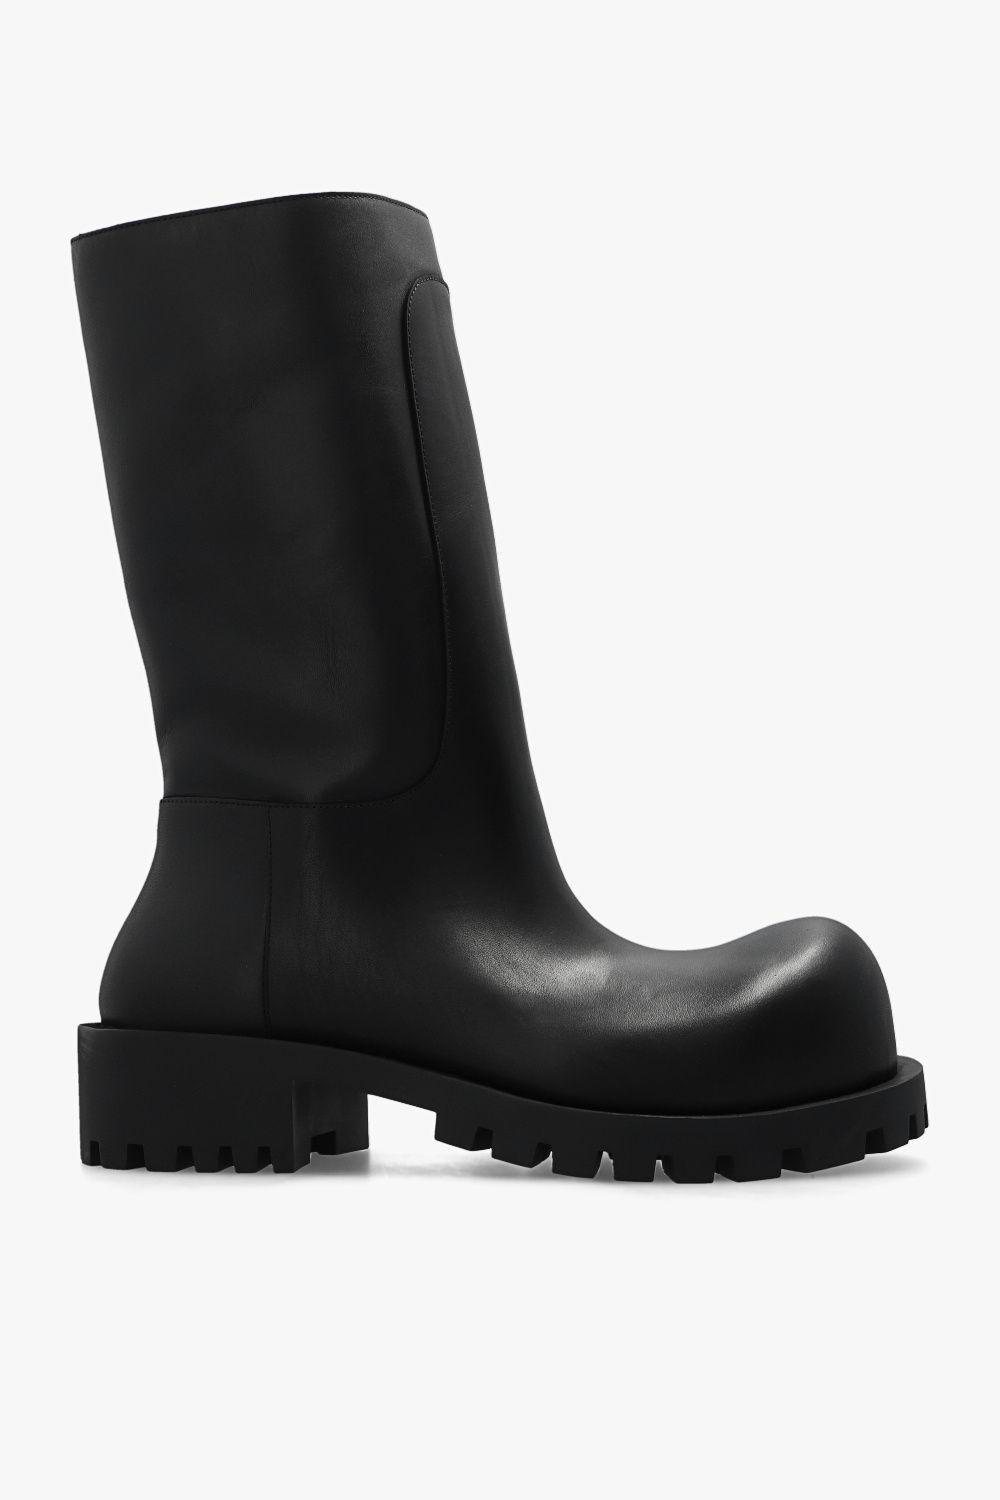 Balenciaga 'hummer' Boots in Black for Men | Lyst